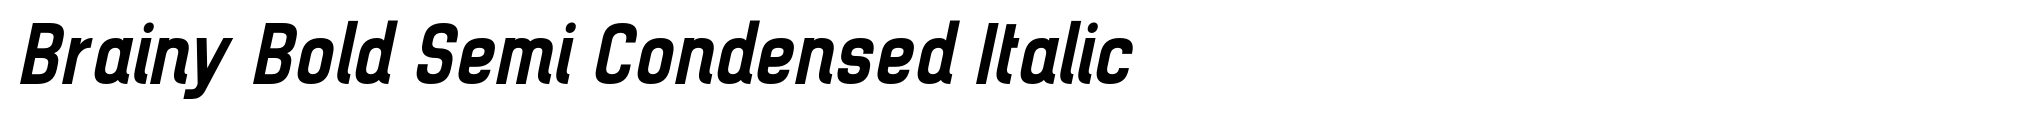 Brainy Bold Semi Condensed Italic image